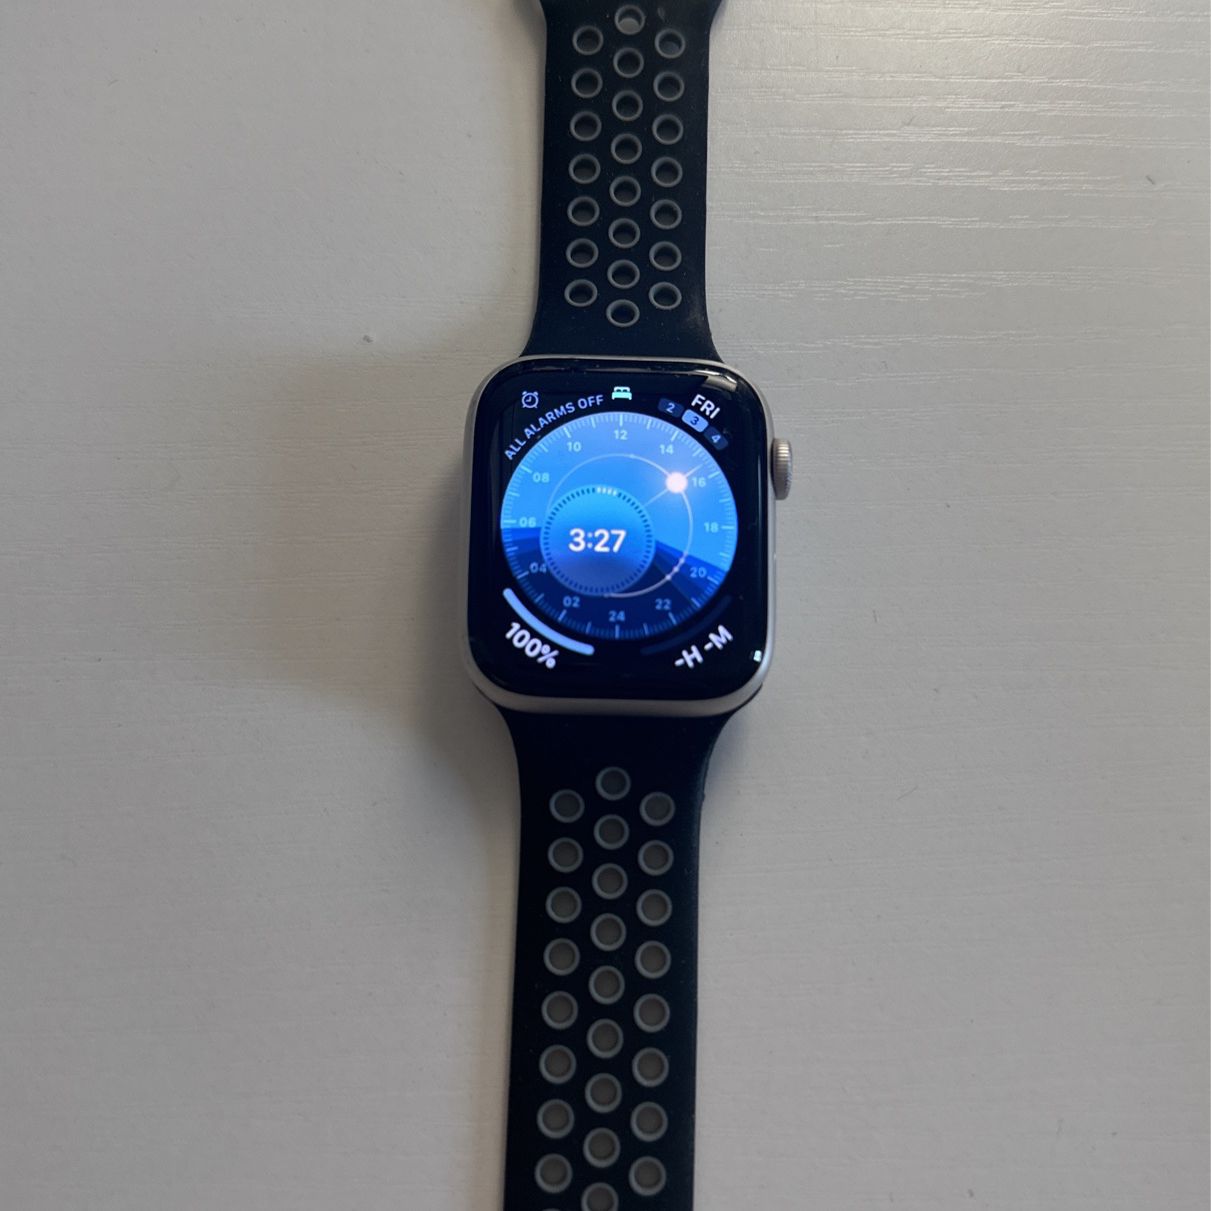 Apple Watch SE with Original Strap - Excellent Condition 